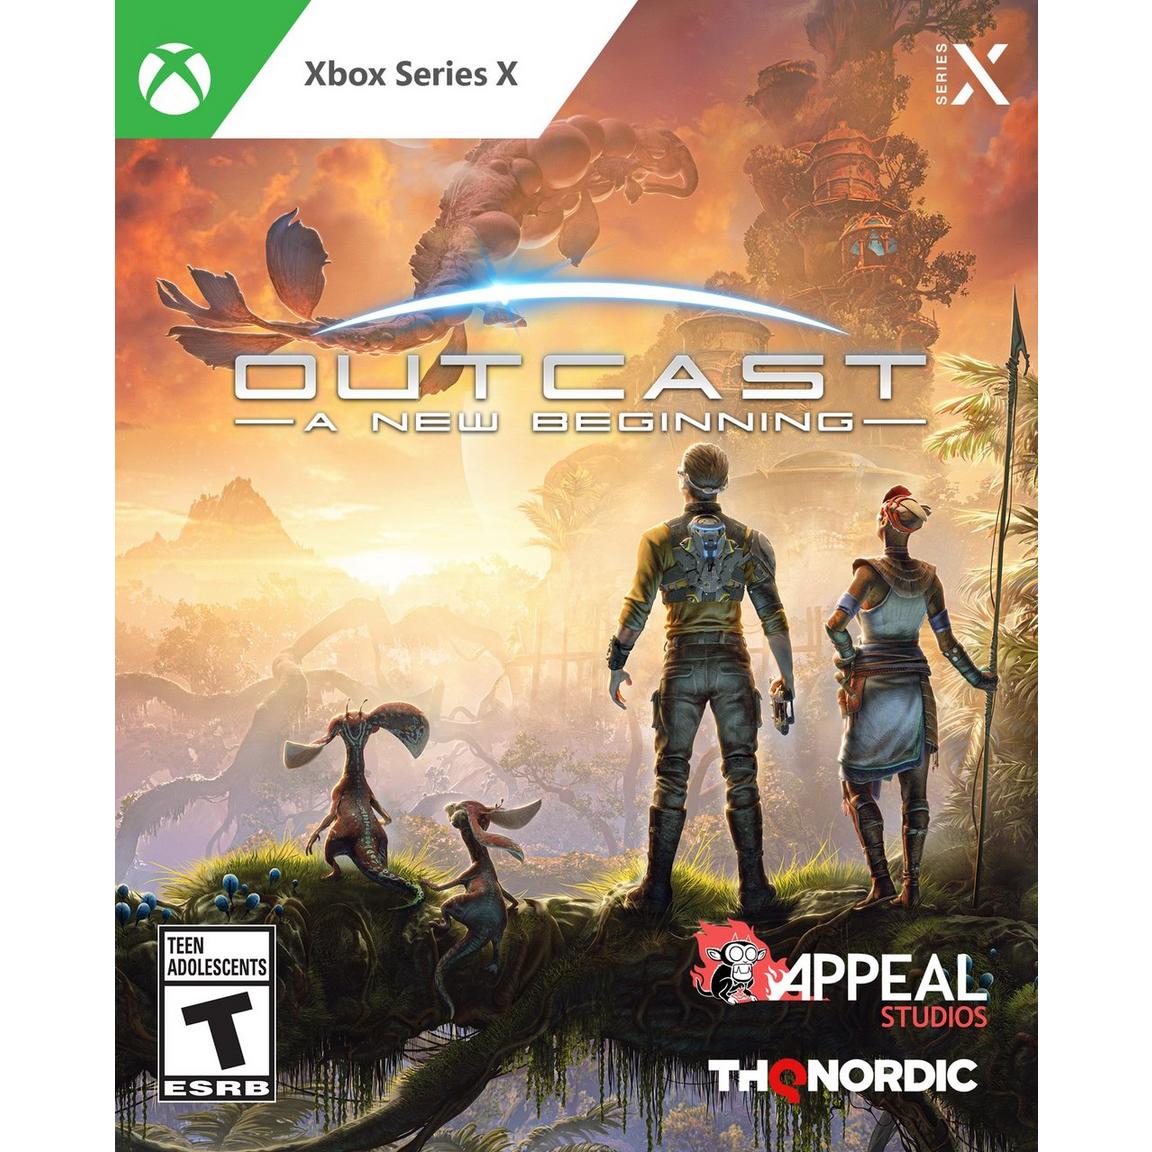 Видеоигра Outcast - A New Beginning - Xbox Series X xbox игра thq nordic outcast a new beginning стандартное издание